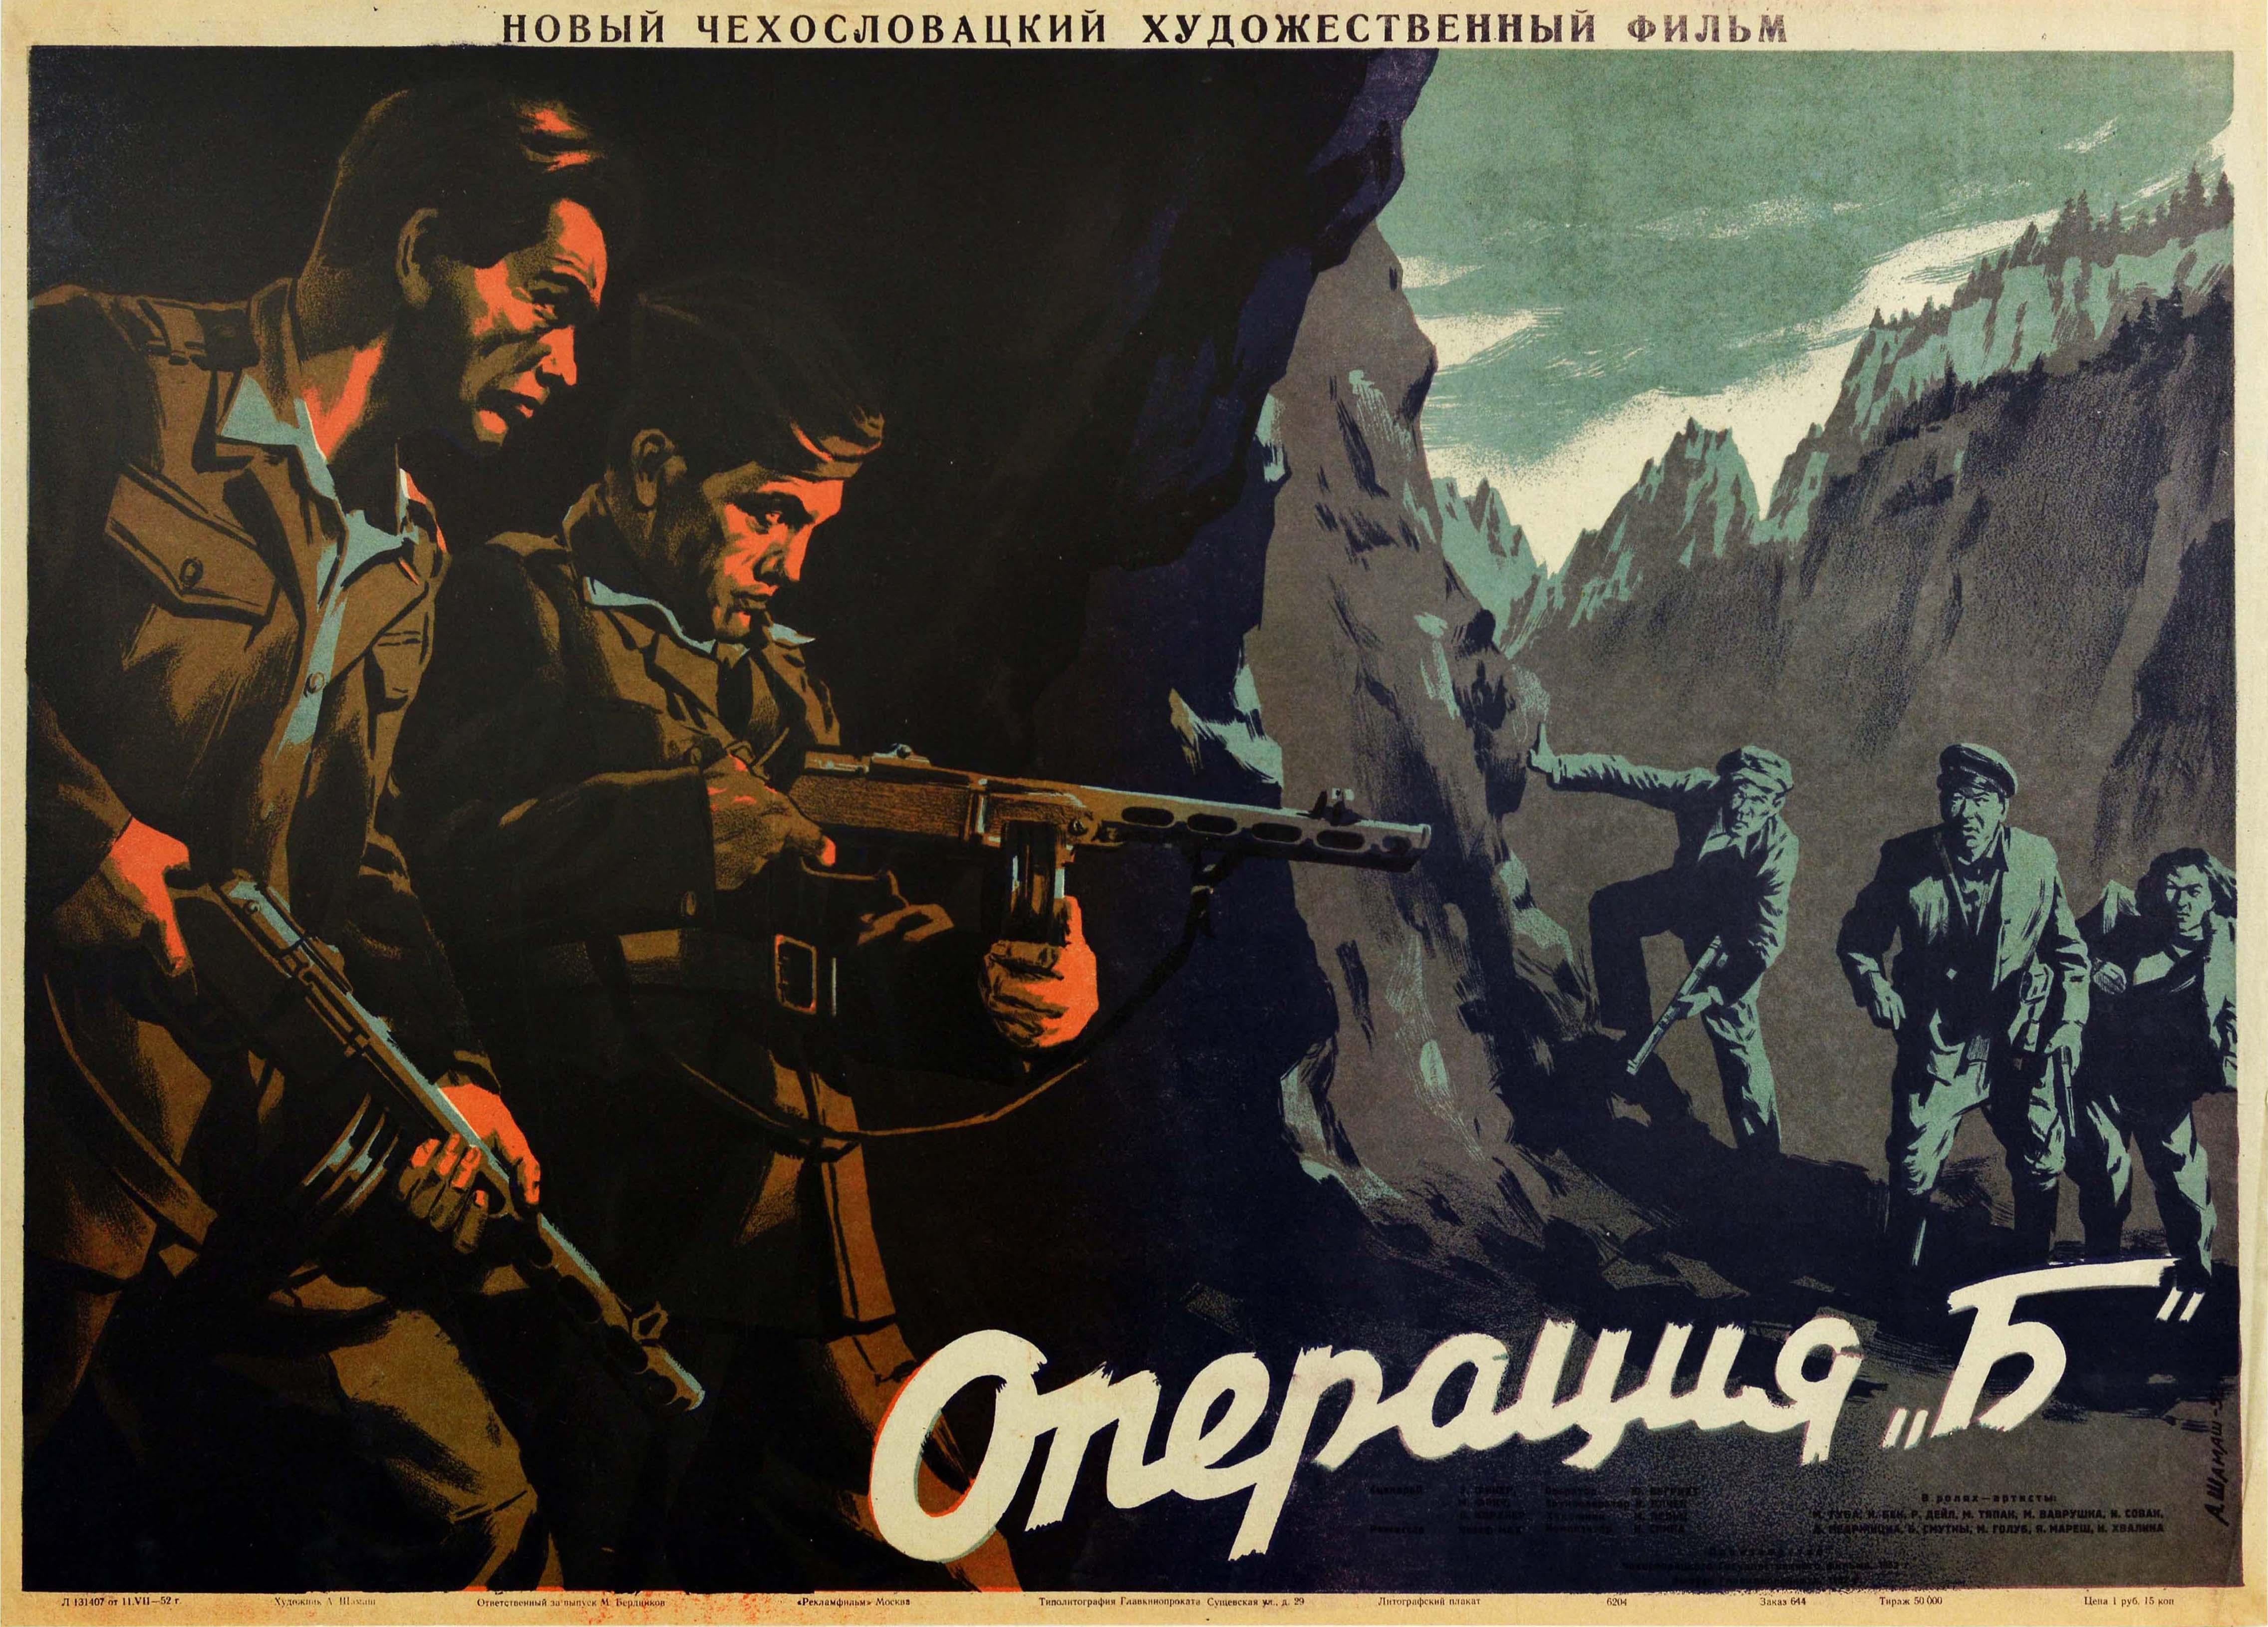 A. Shamash Print - Original Vintage Film Poster Action B Czechoslovakian WWII Movie Insurgent Army